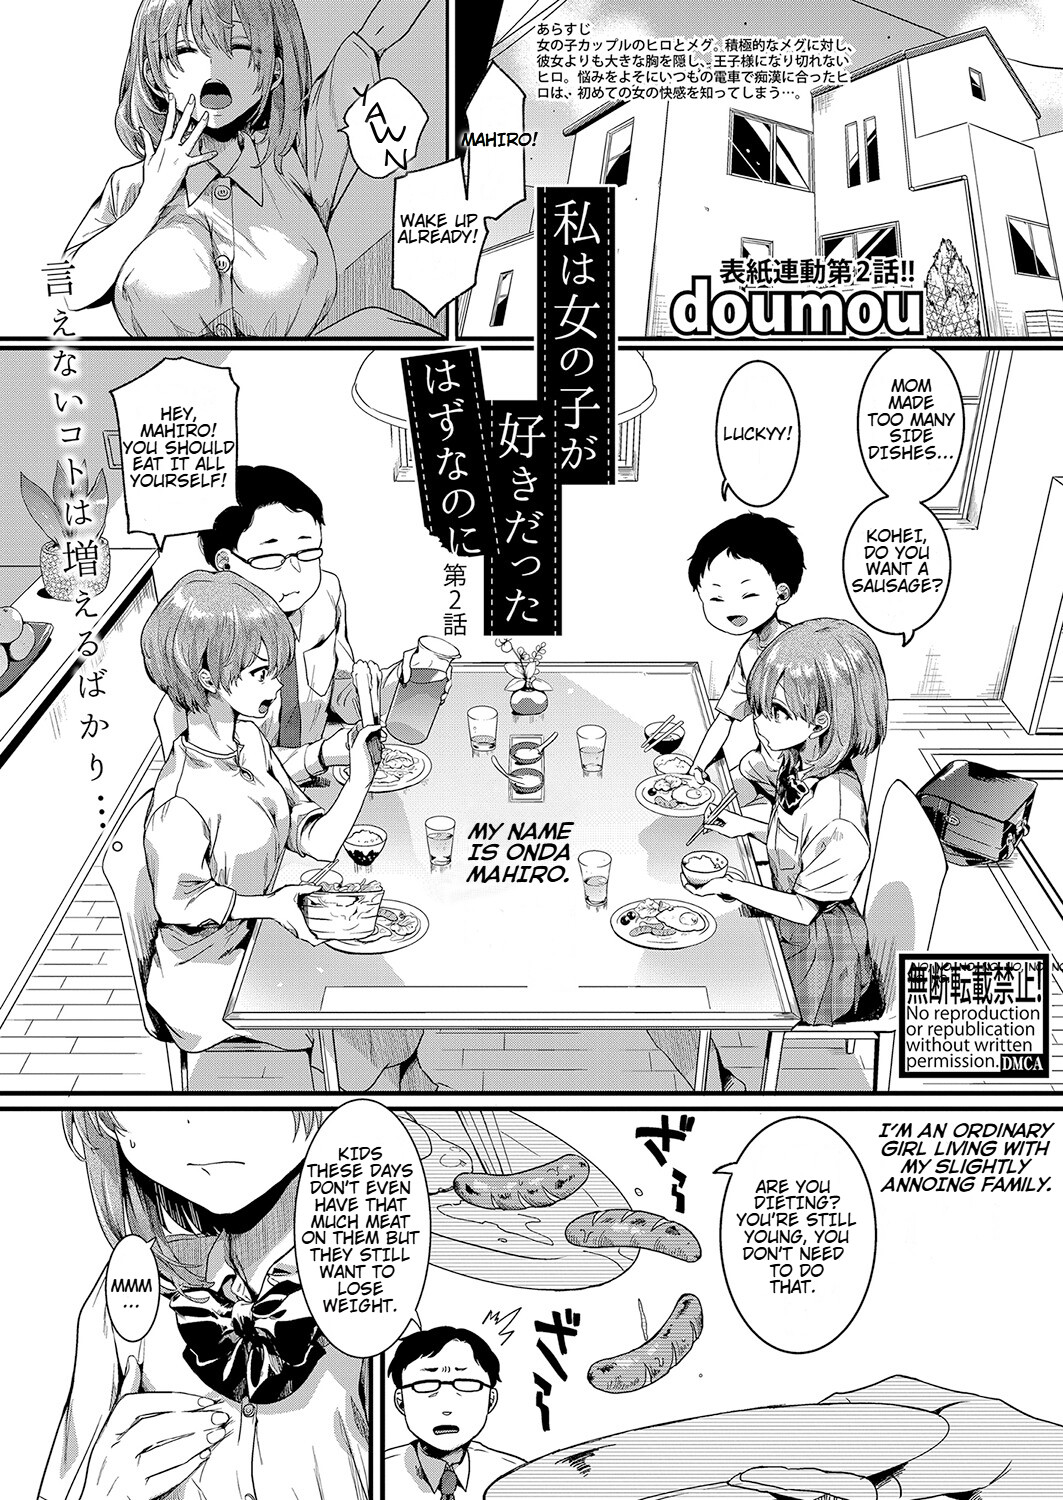 Hentai Manga Comic-Even Though I Like Girls...-Chapter 2-1